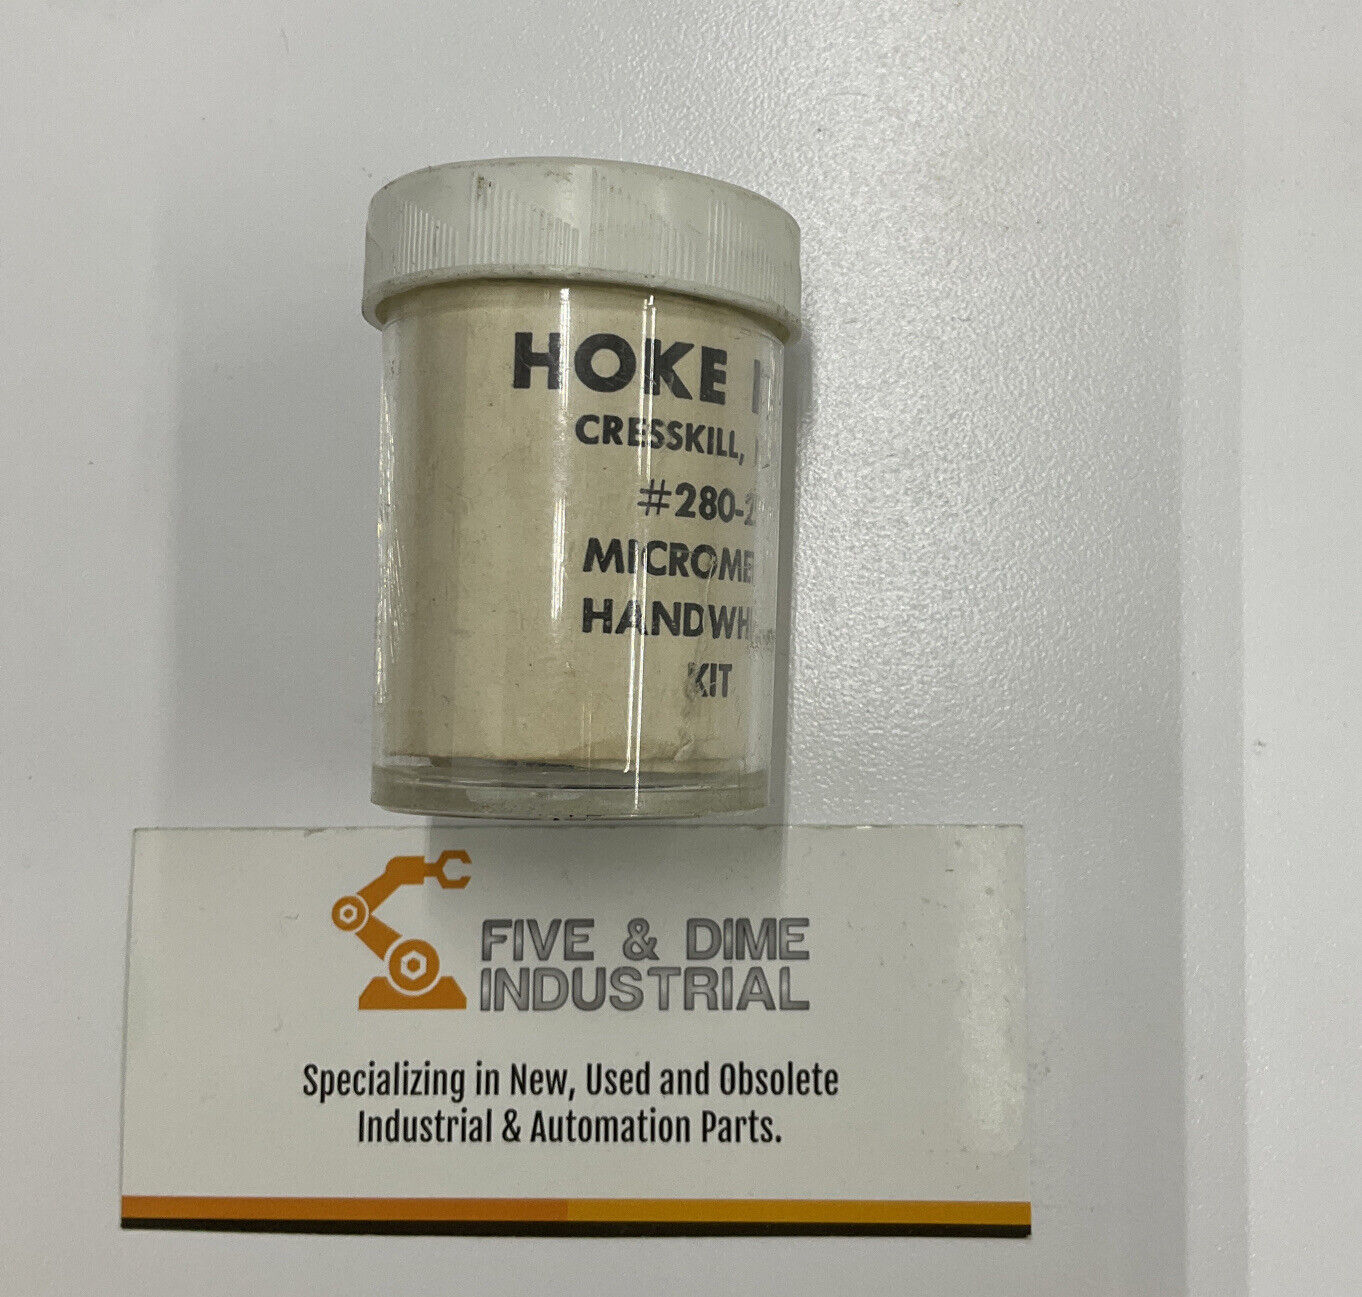 Hoke Inc. 280-25 Micrometer Handwheel Kit (BL255)